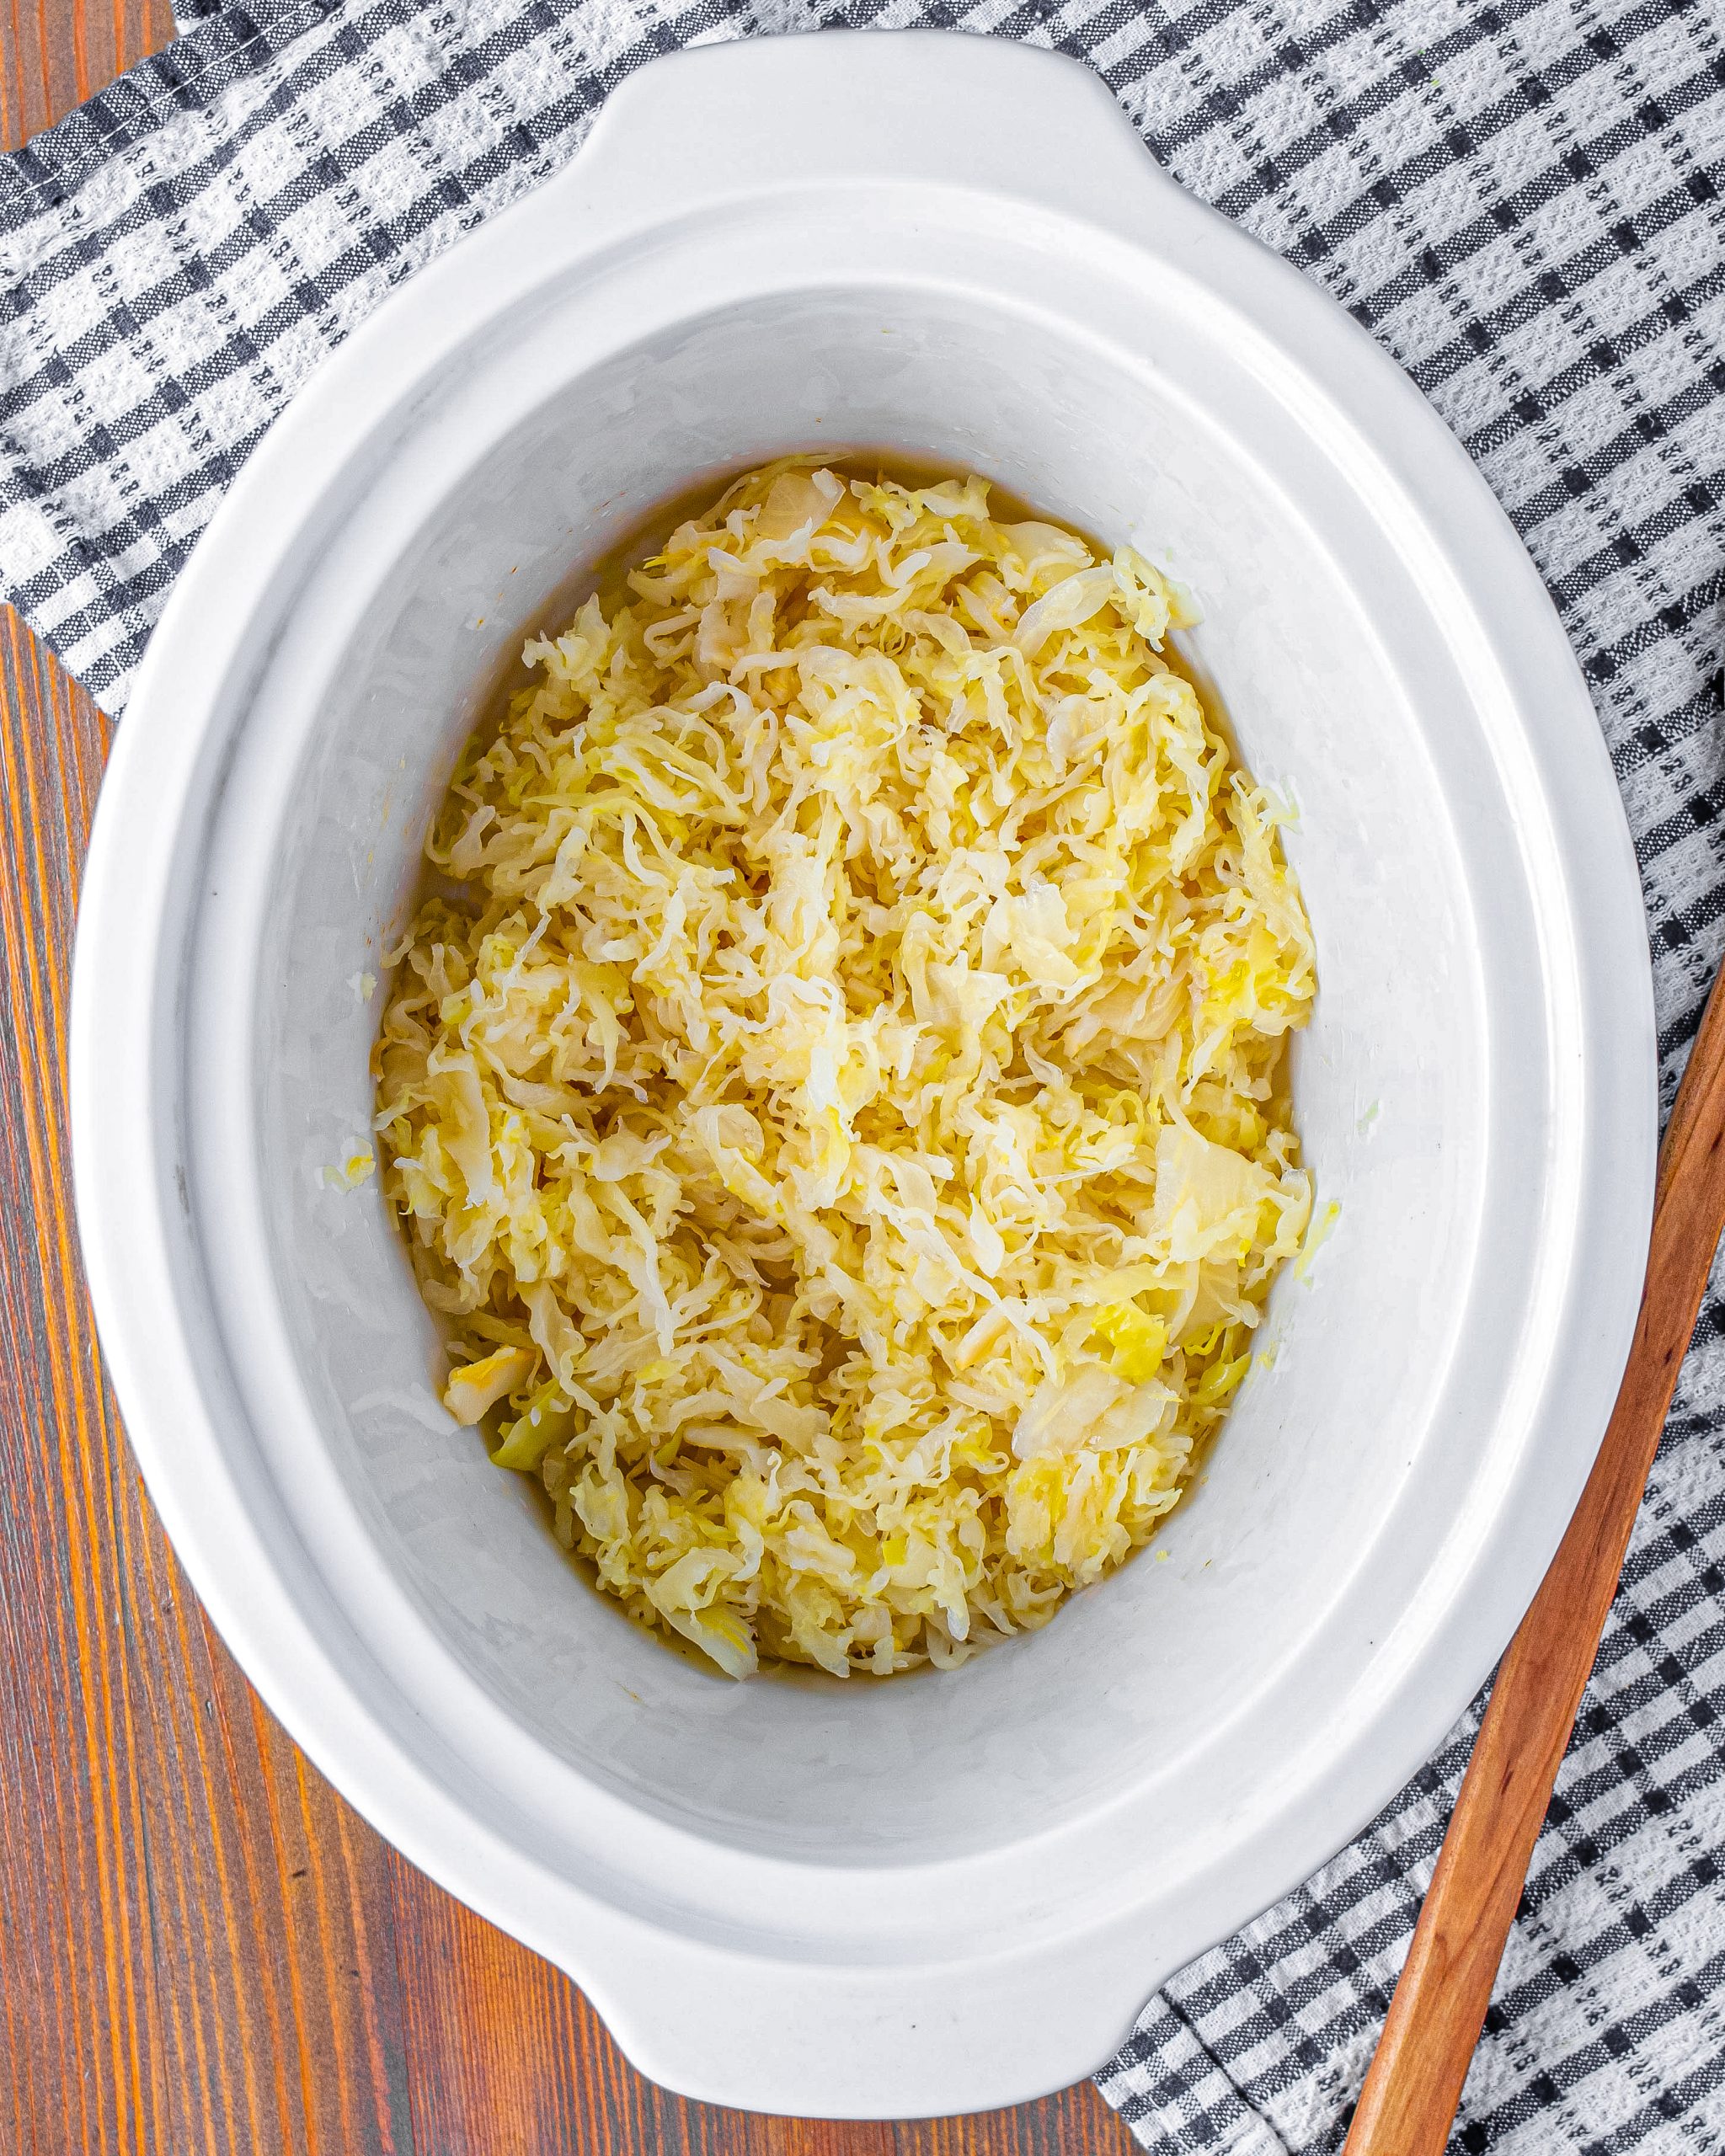 Place the sauerkraut into the bottom of the crockpot.